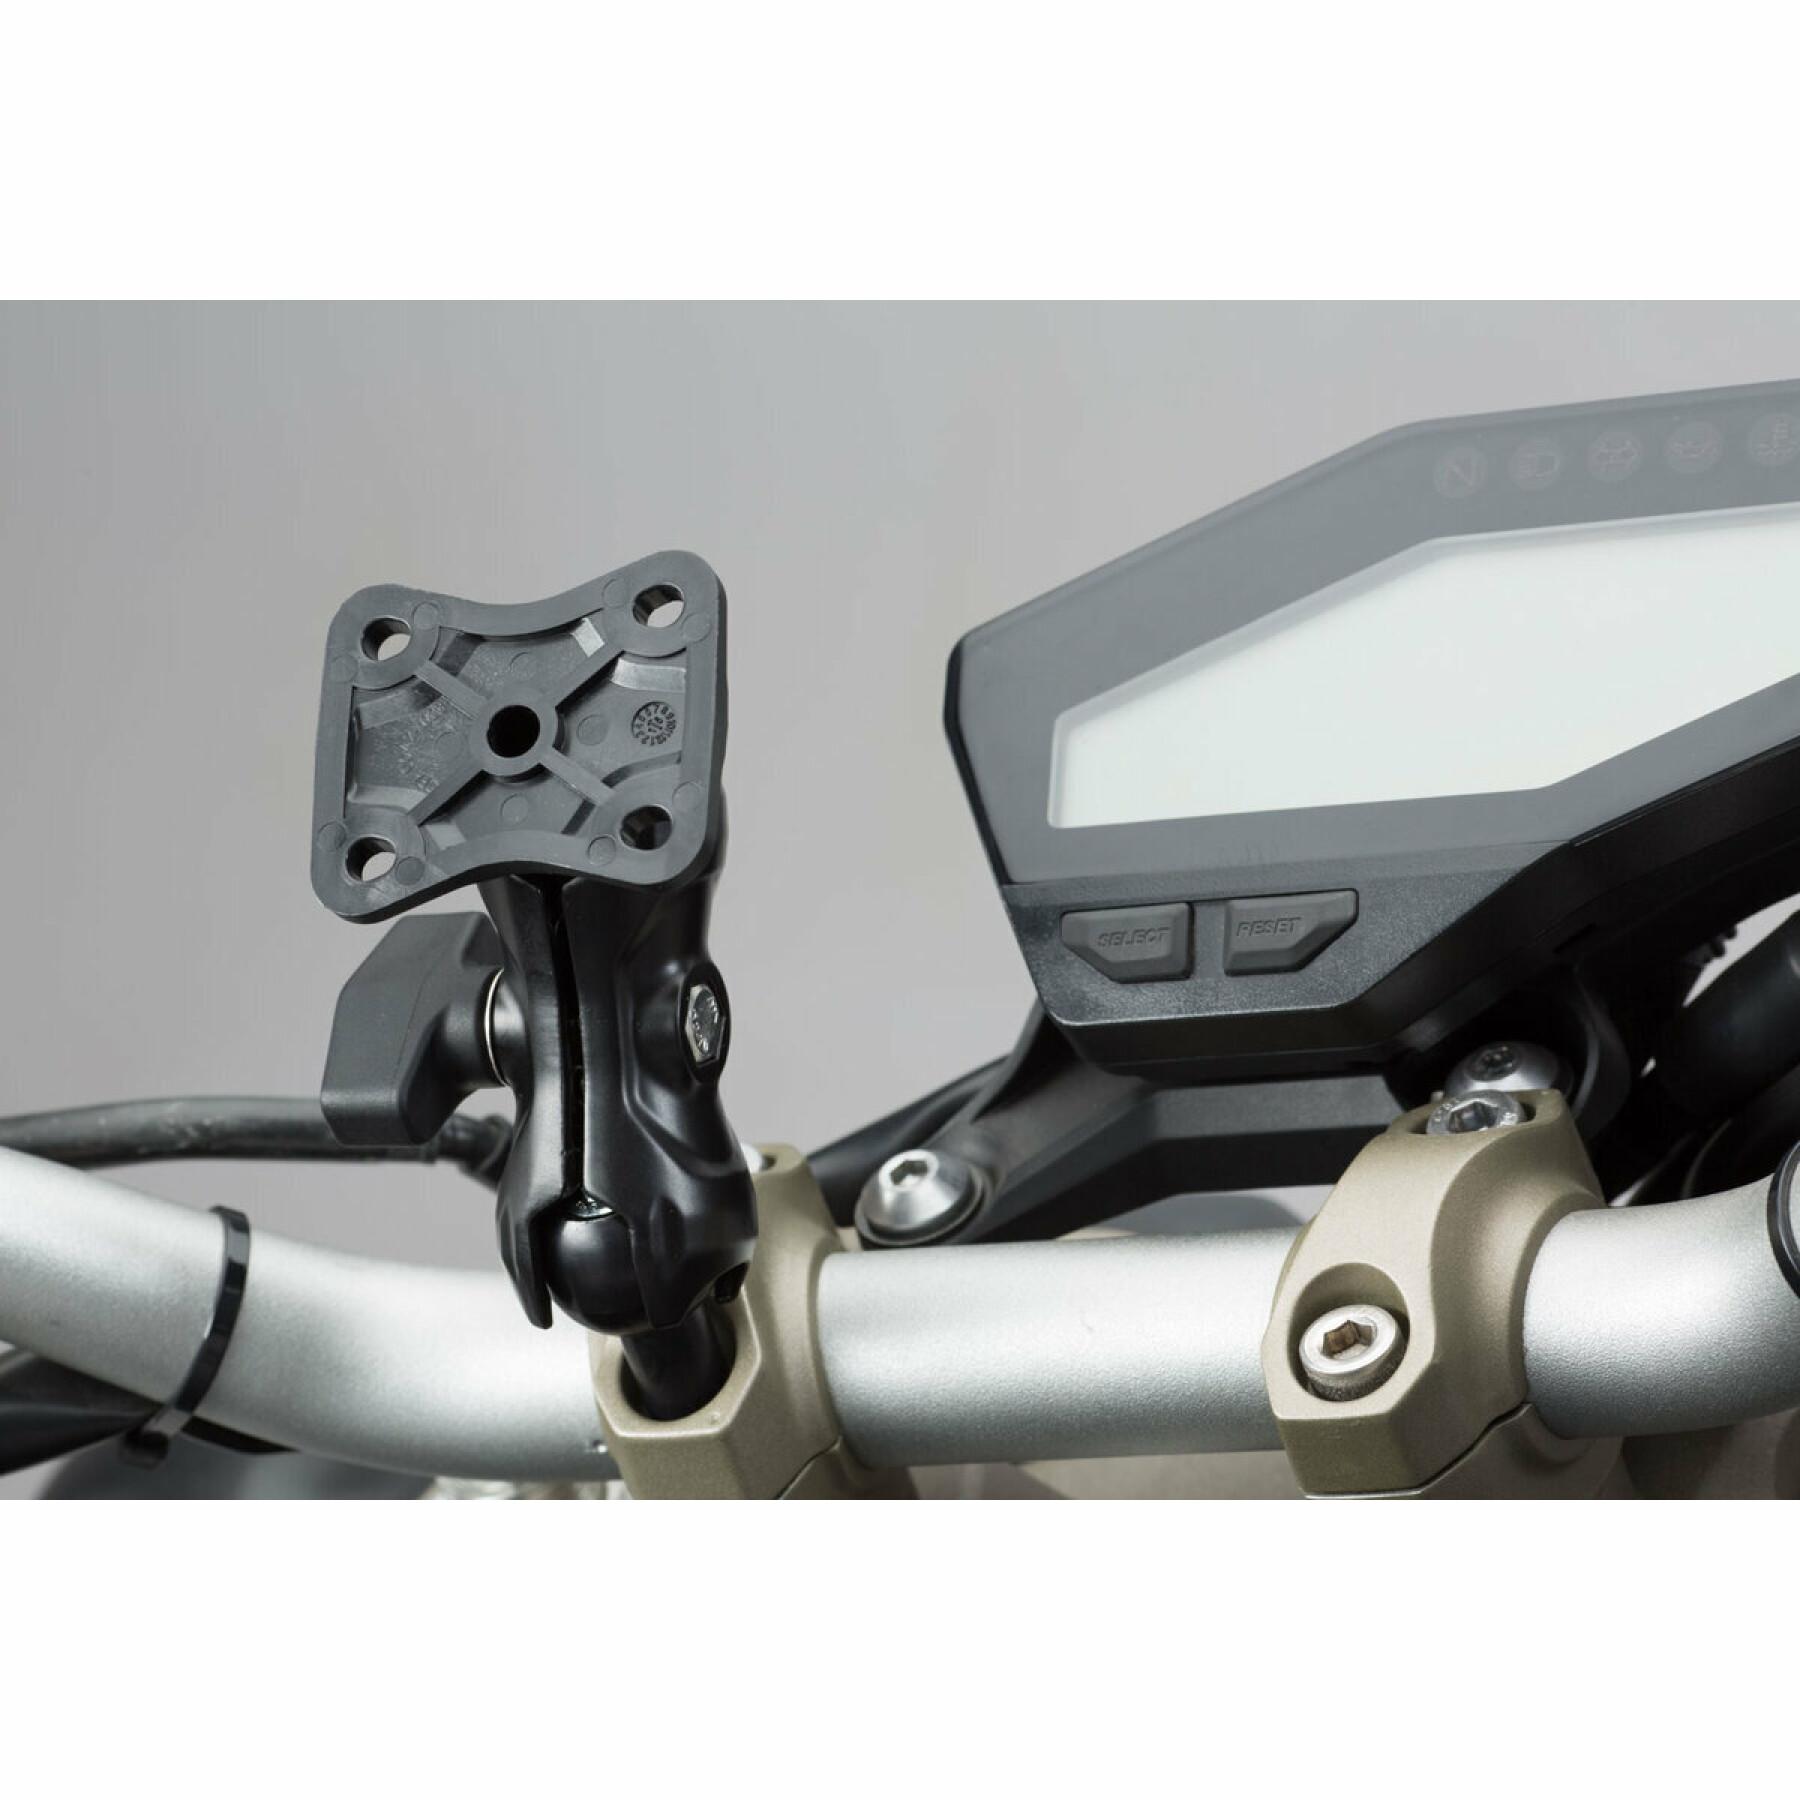 Soporte universal roscado moto gps con bola y brazo de montaje SW-Motech M8